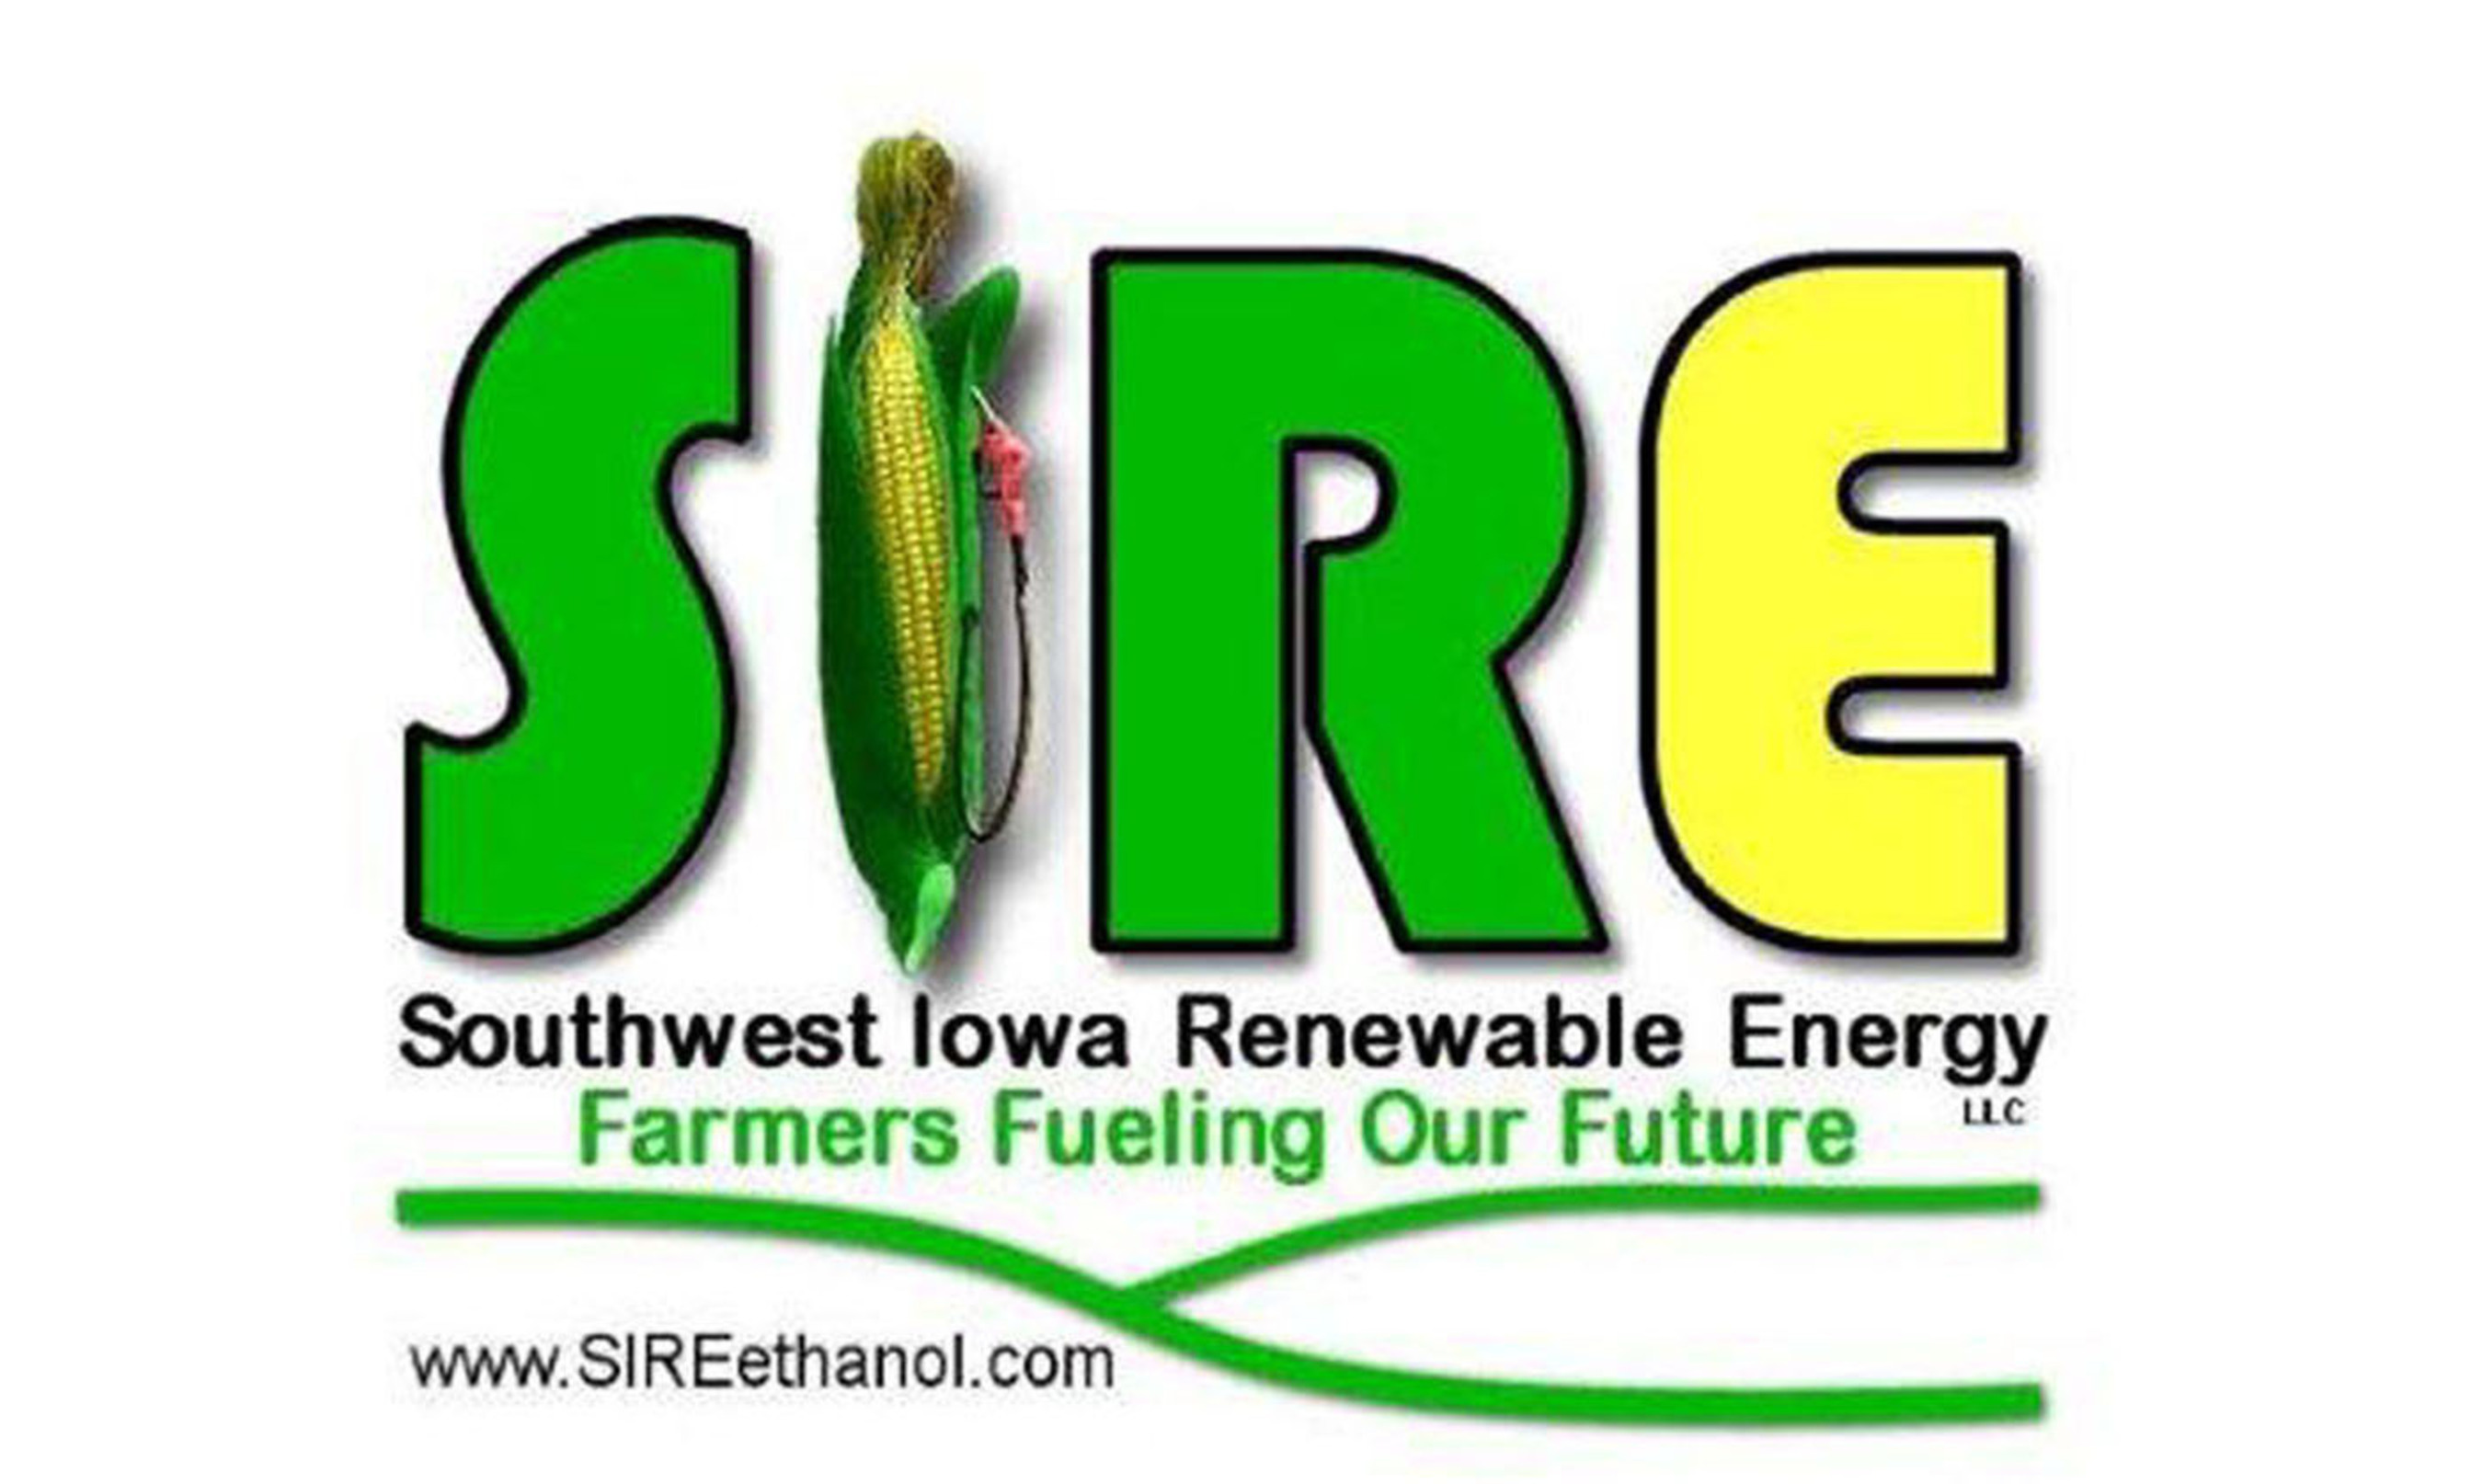 Southwest Iowa Renewable Energy, LLC Announces a Fire at Its Plant Today